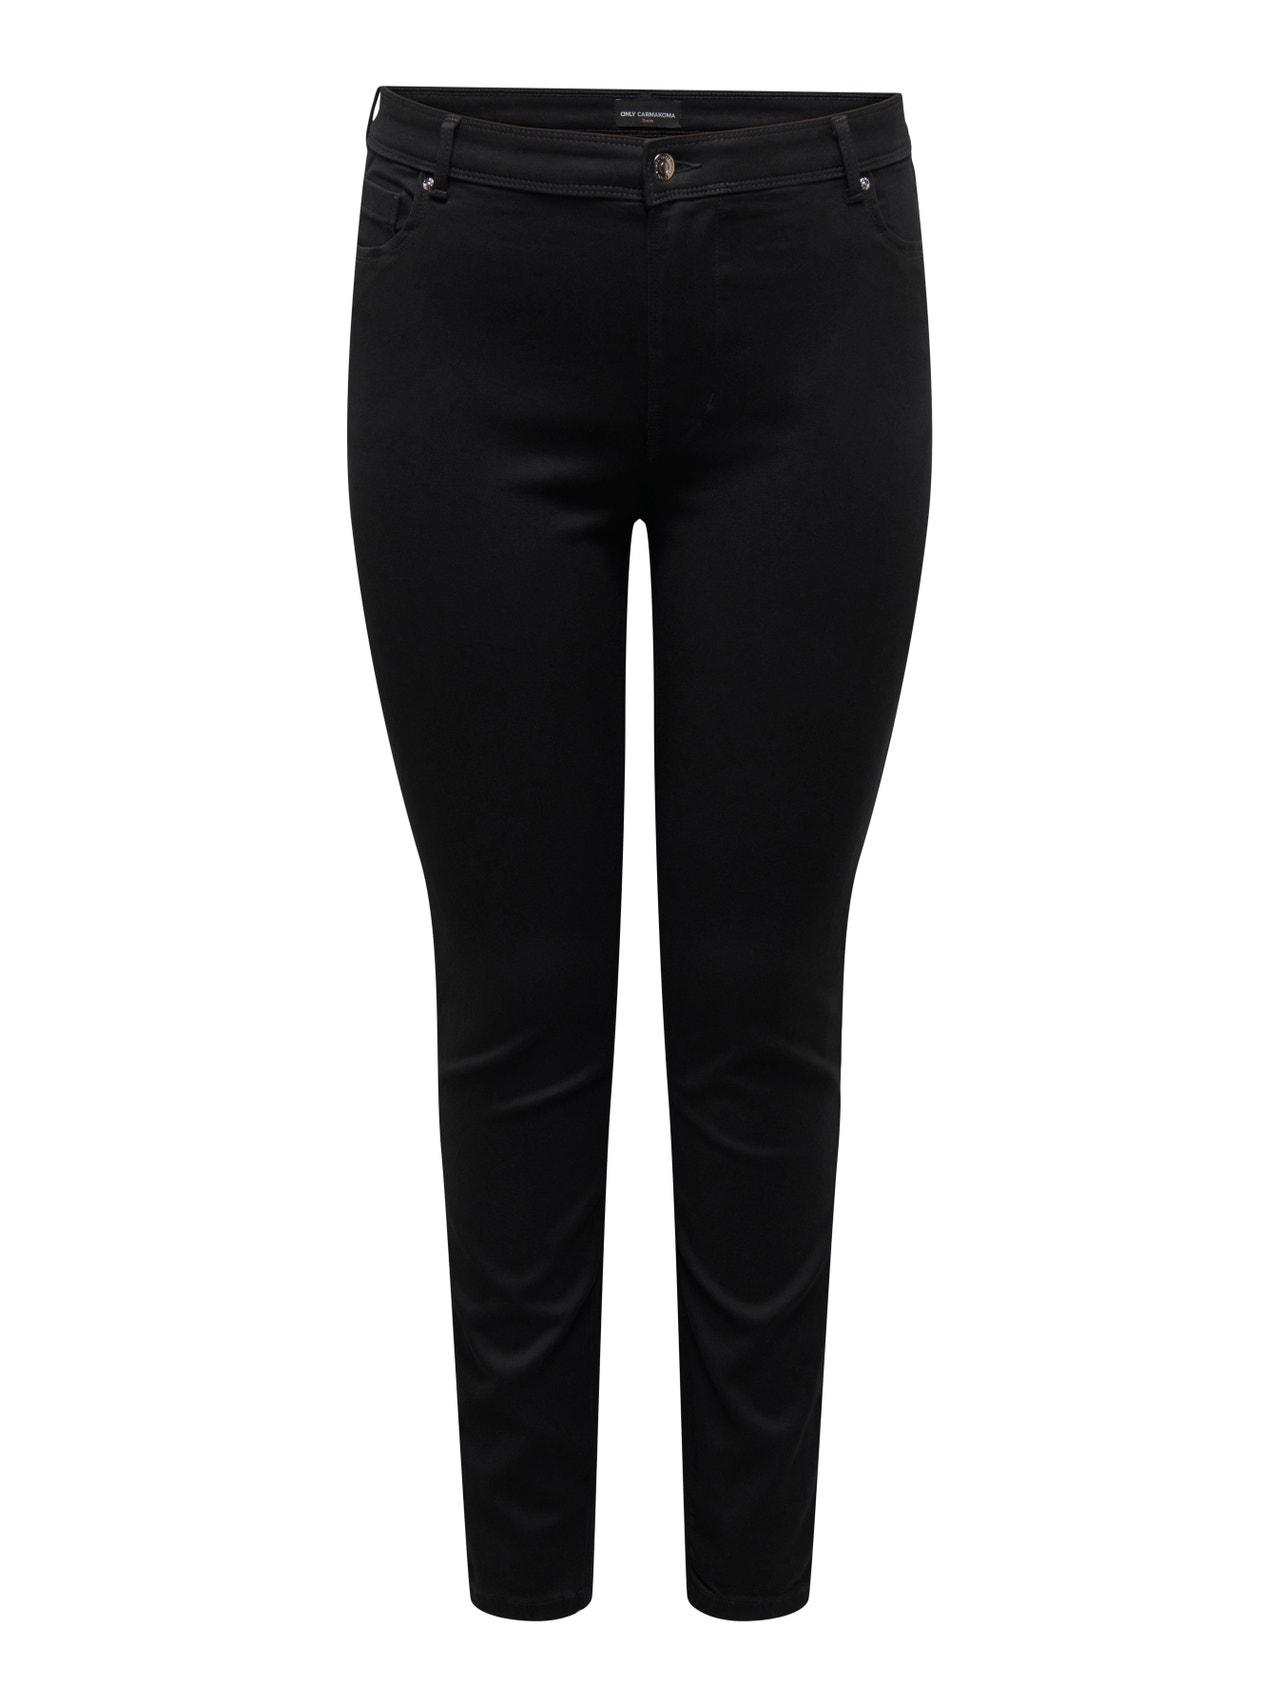 ONLY Skinny Fit Mid waist Jeans -Black Denim - 15307662